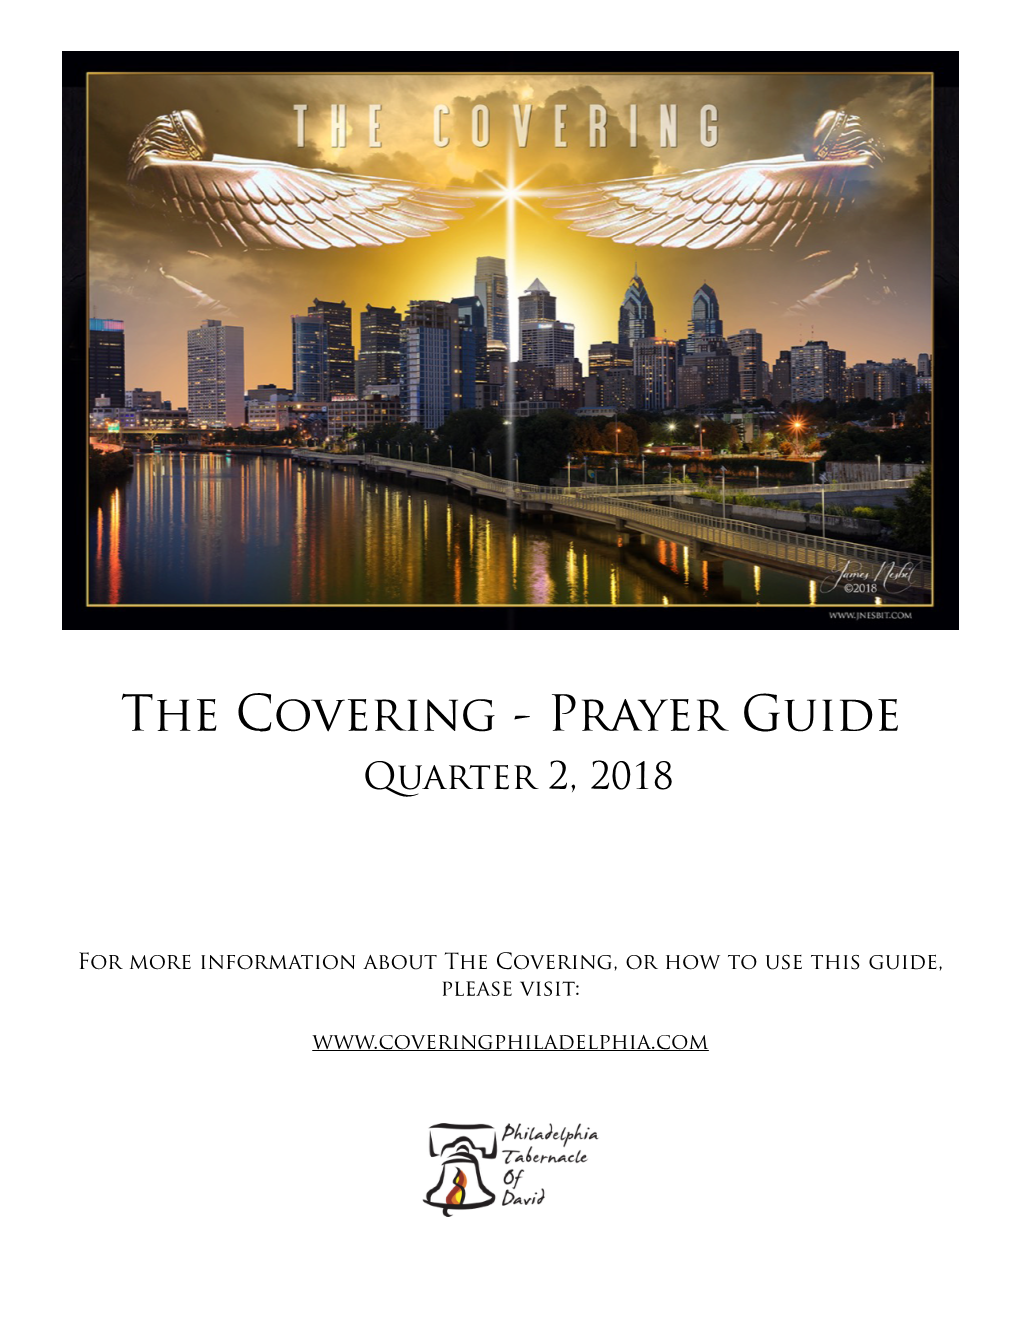 The Covering - Prayer Guide Quarter 2, 2018